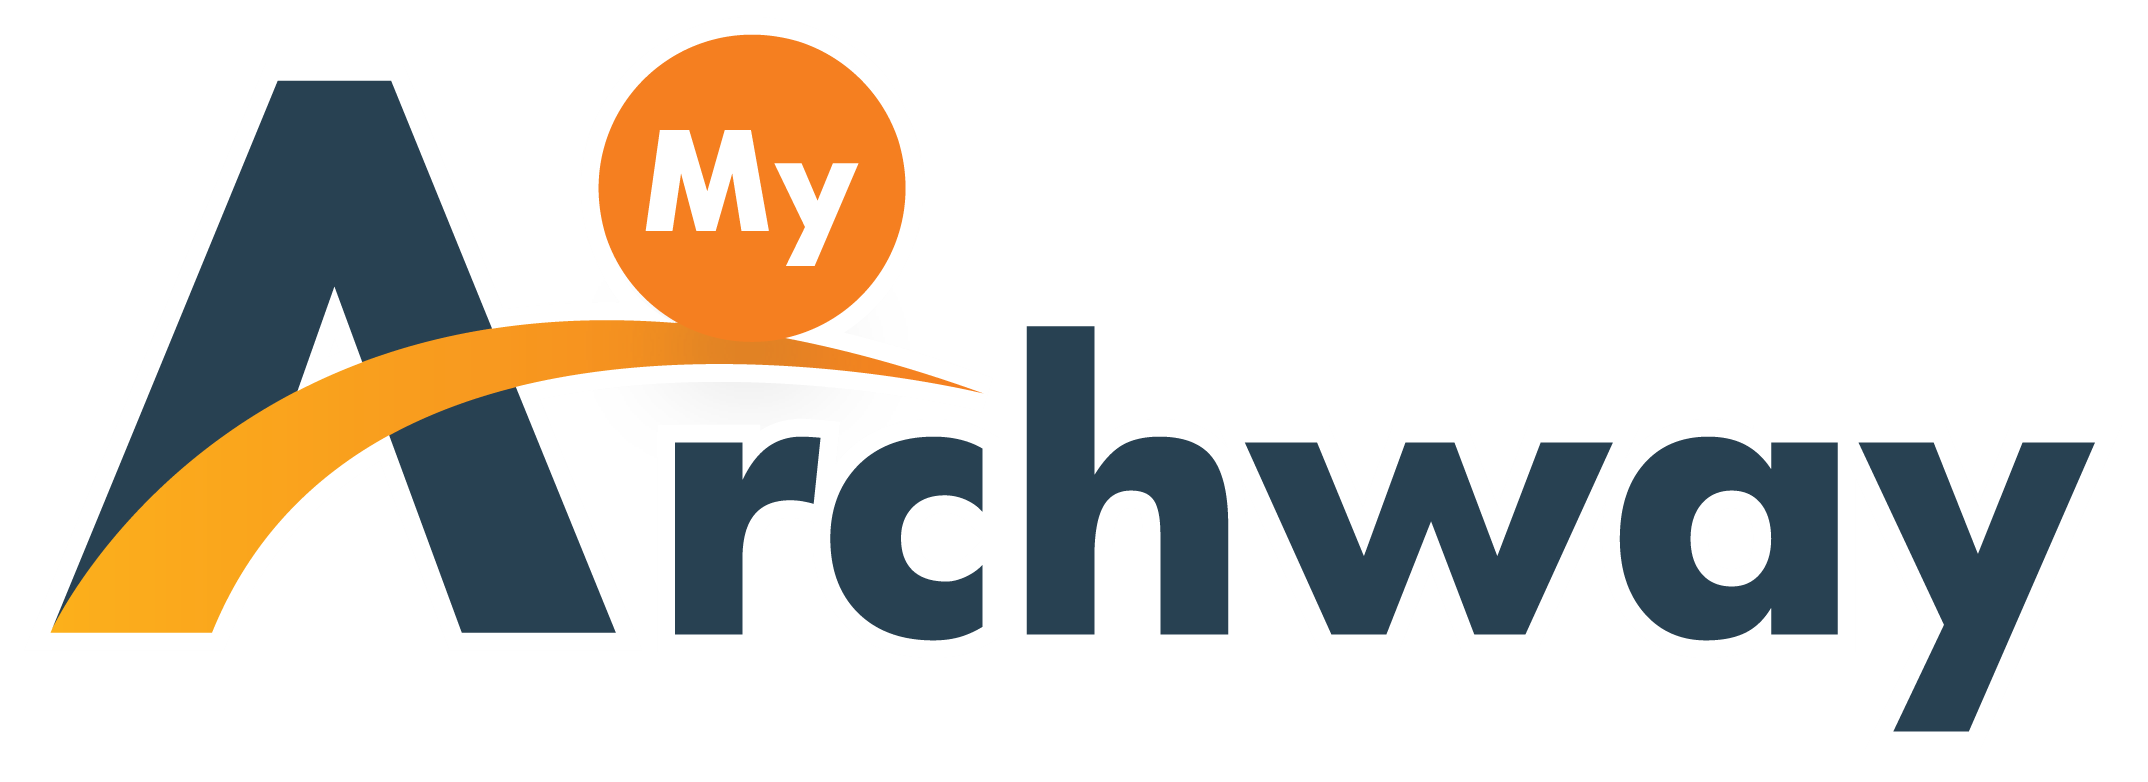 Archway Computer Logo